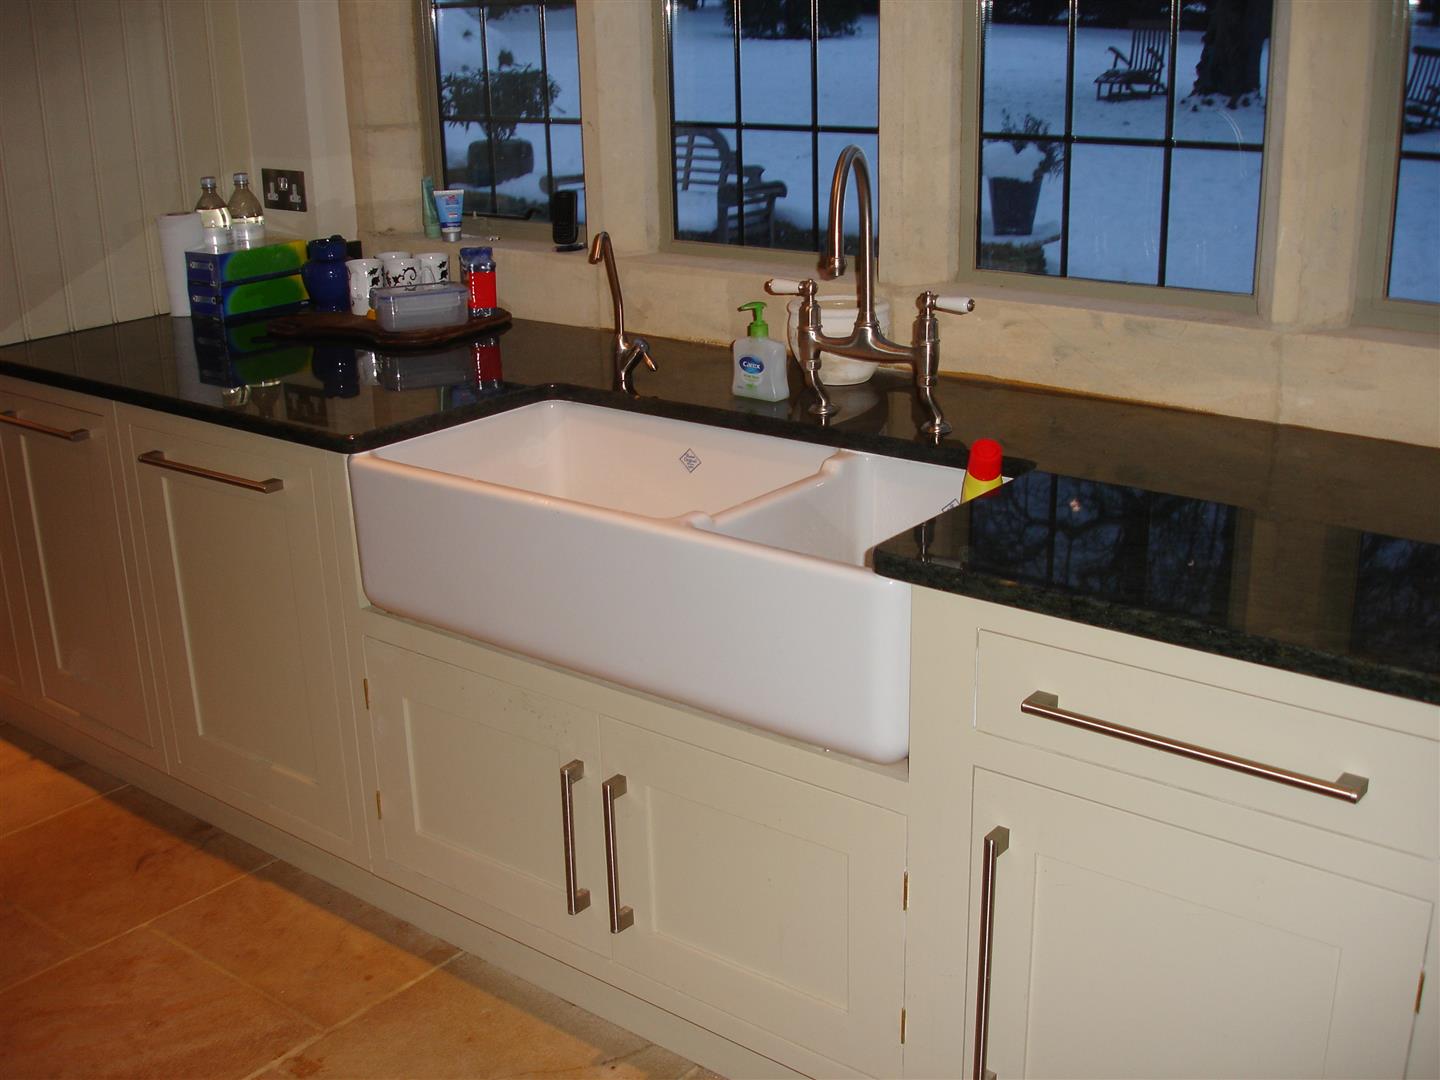 Redbrook kitchens design and install bespoke kitchens in Gloucestershire Plain fronte framed Shaker design with modern handles